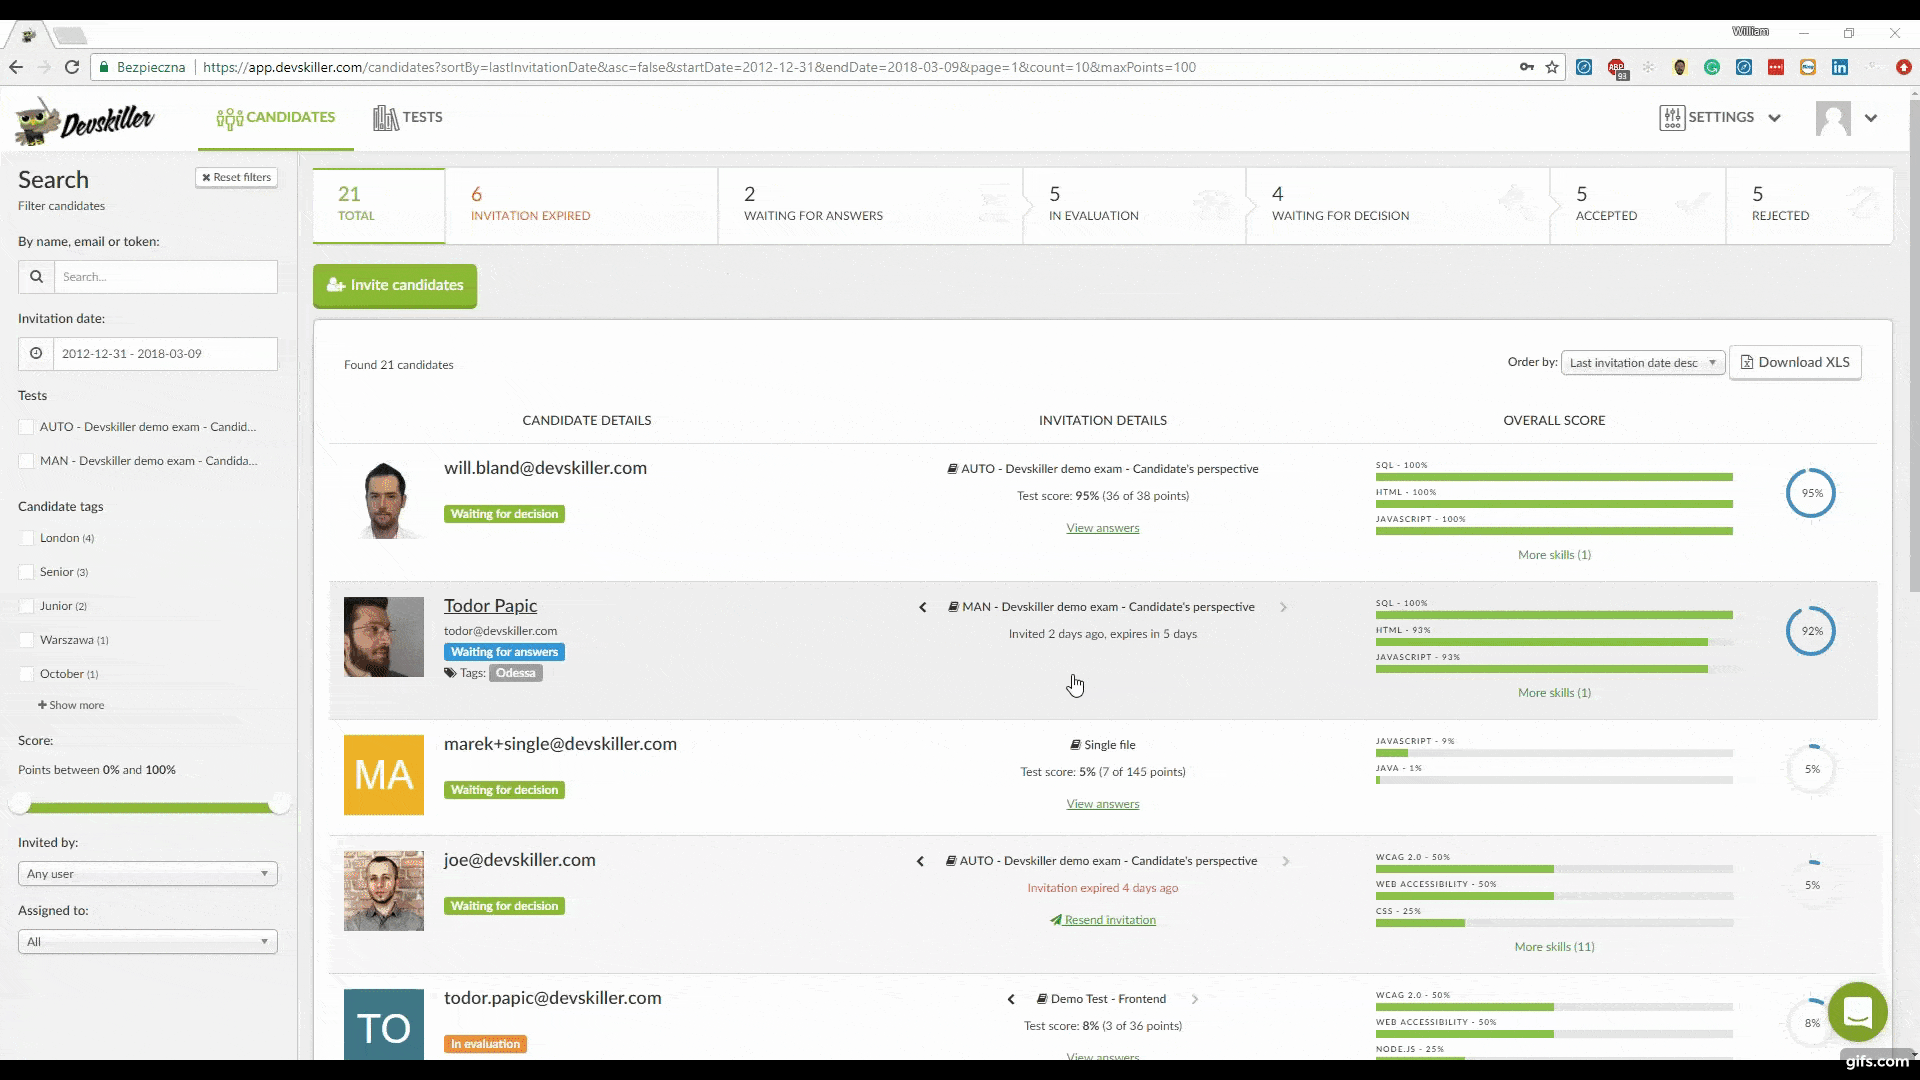 Update DevSkiller-platform - u kunt nu volledige testsessies opnemen